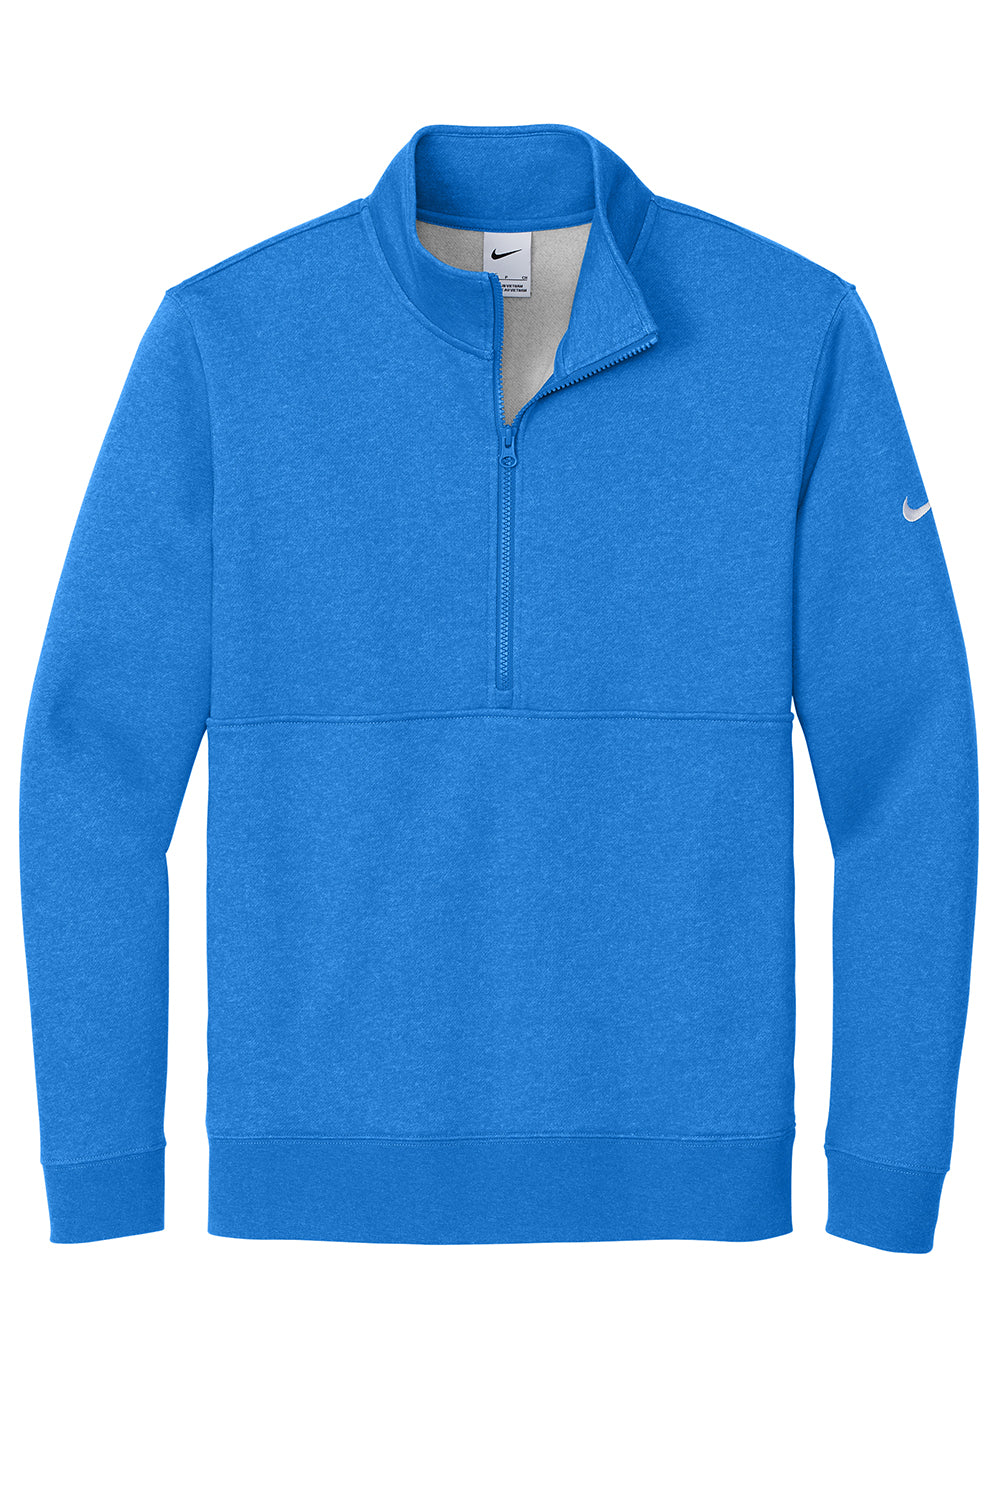 Nike NKDX6718 Mens Club Fleece 1/4 Zip Sweatshirt Heather Light Royal Blue Flat Front